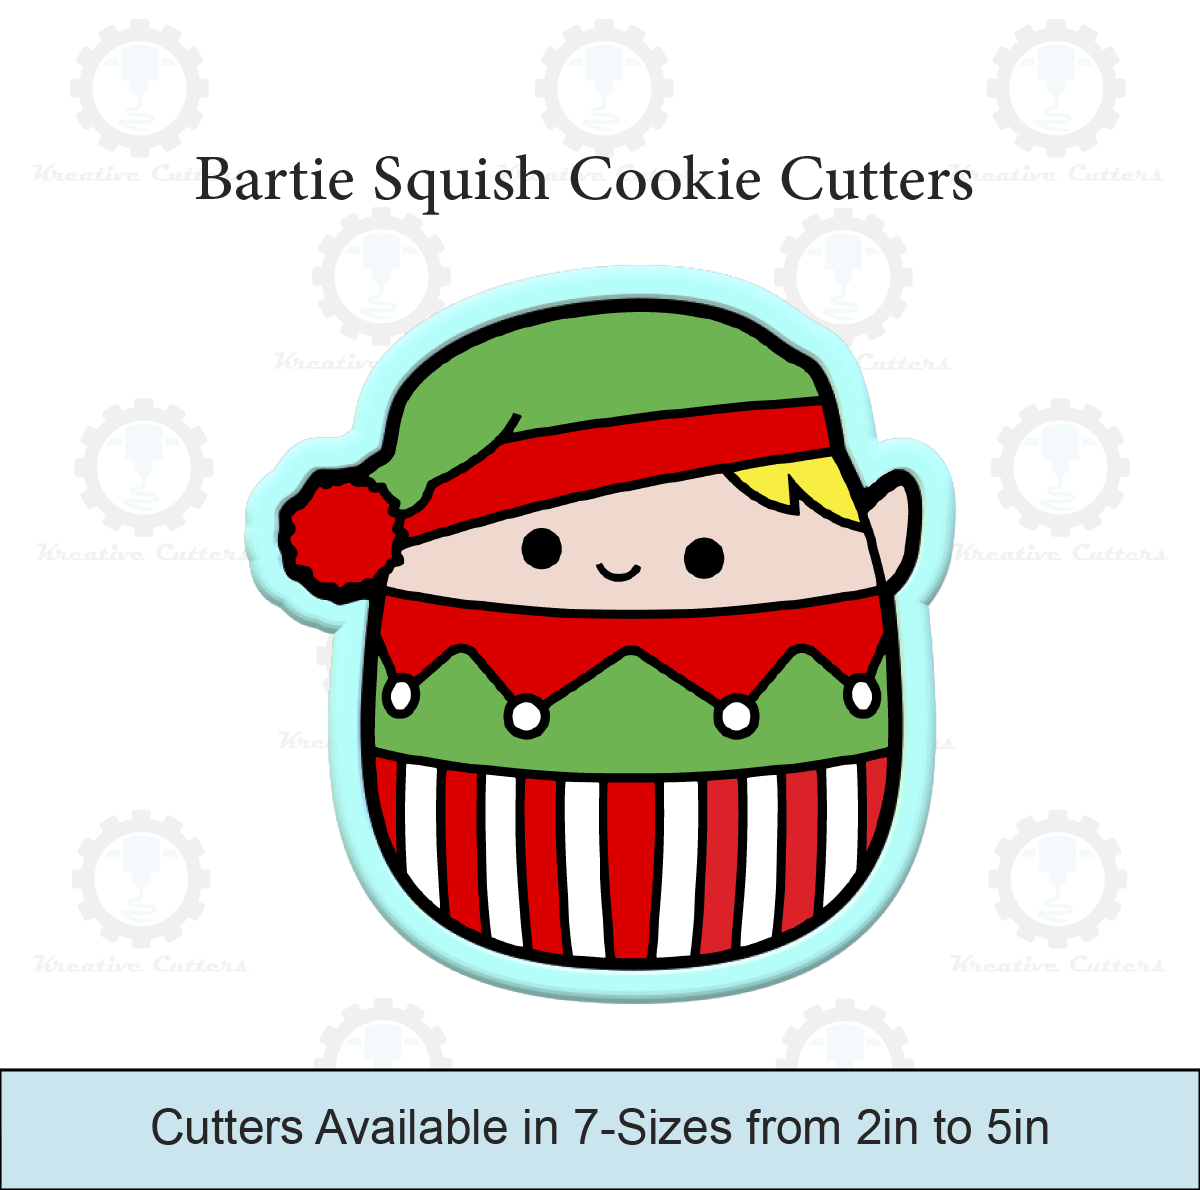 Bartie Squish Cookie Cutters